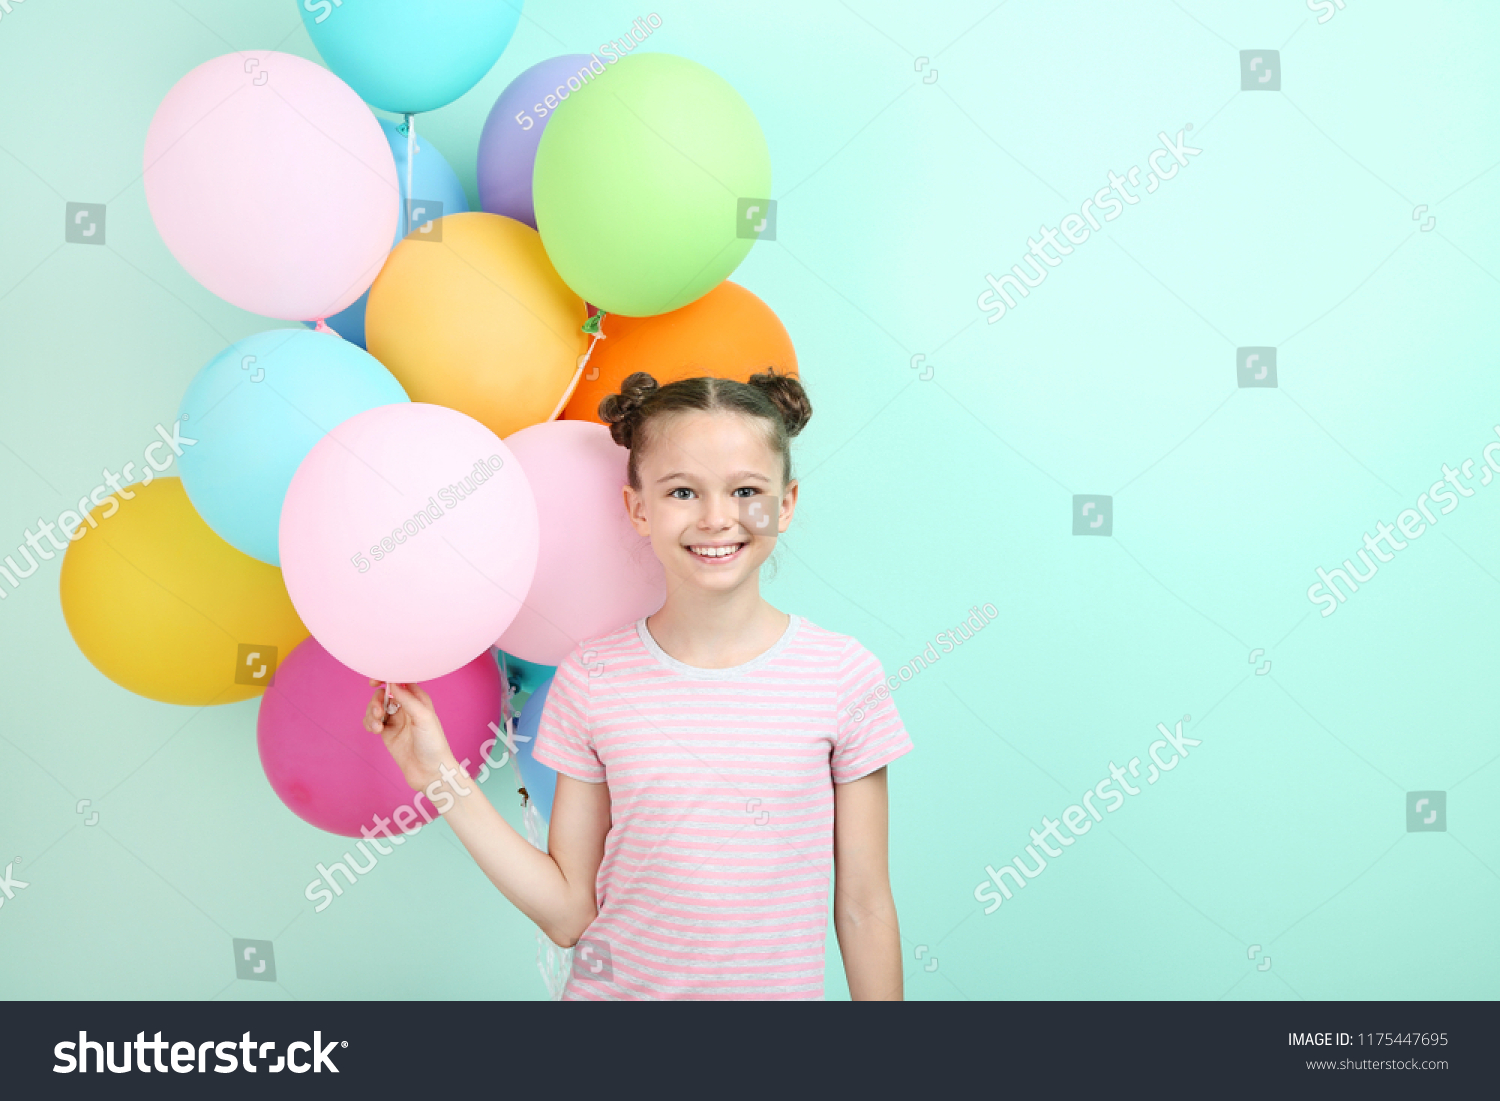 Balloonsgirl Images, Stock Photos & Vectors | Shutterstock